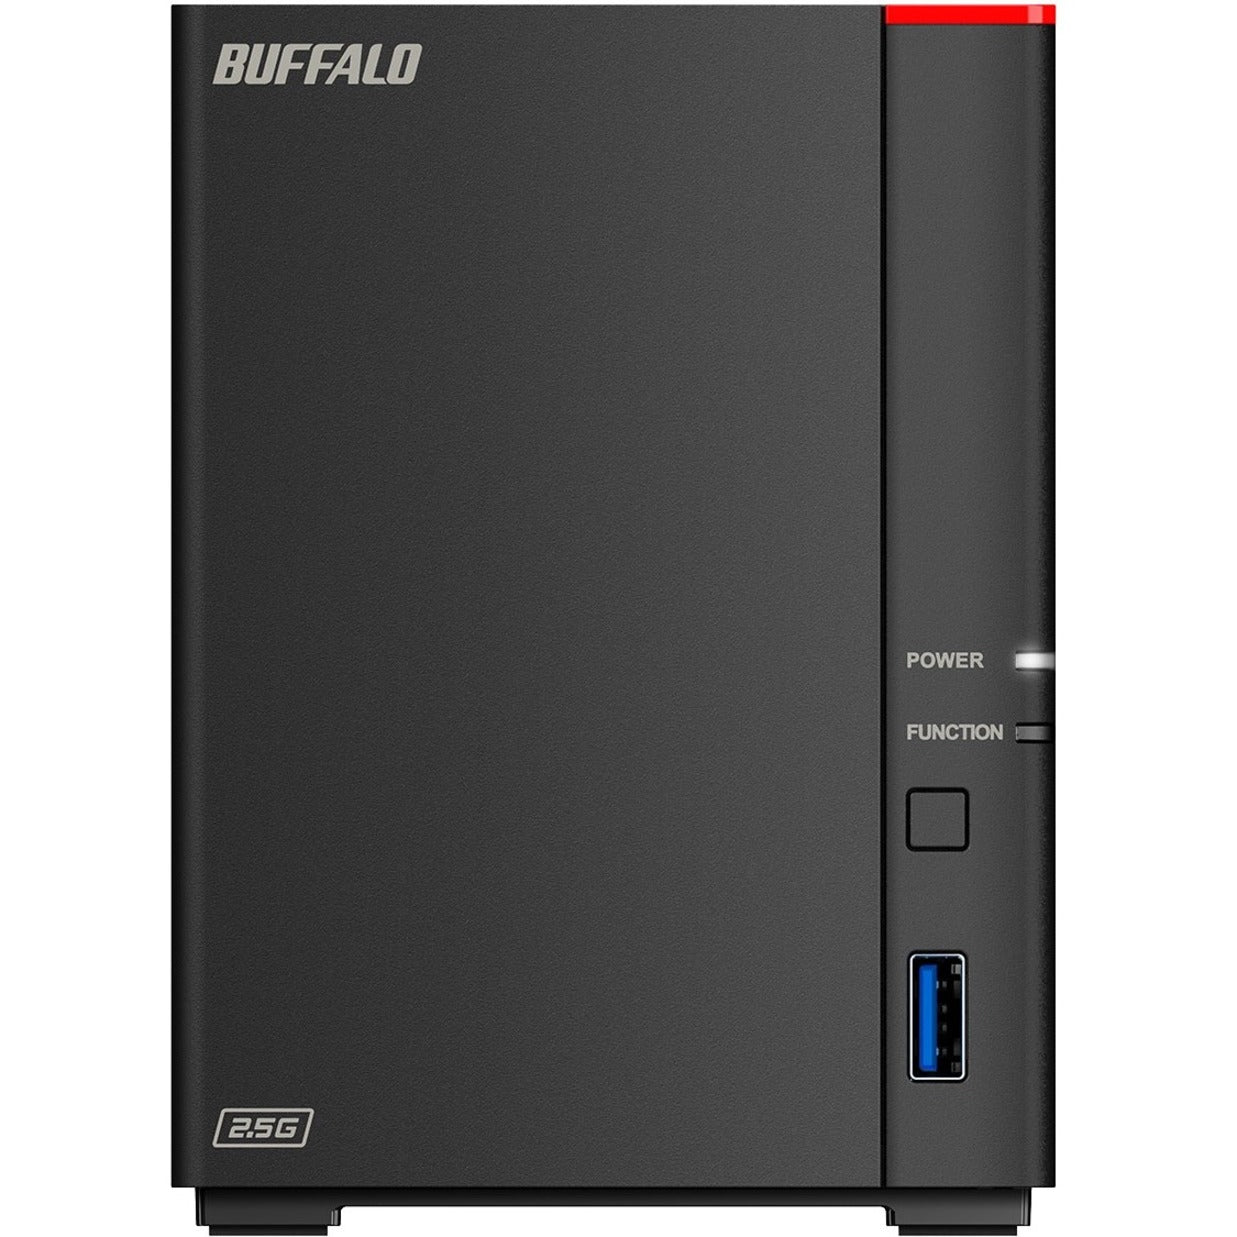 Buffalo LS720D1602 LinkStation 720D 16TB Hard Drives Included (2 x 8TB, 2 Bay), 2GB RAM, RAID Supported, 2 Year Warranty